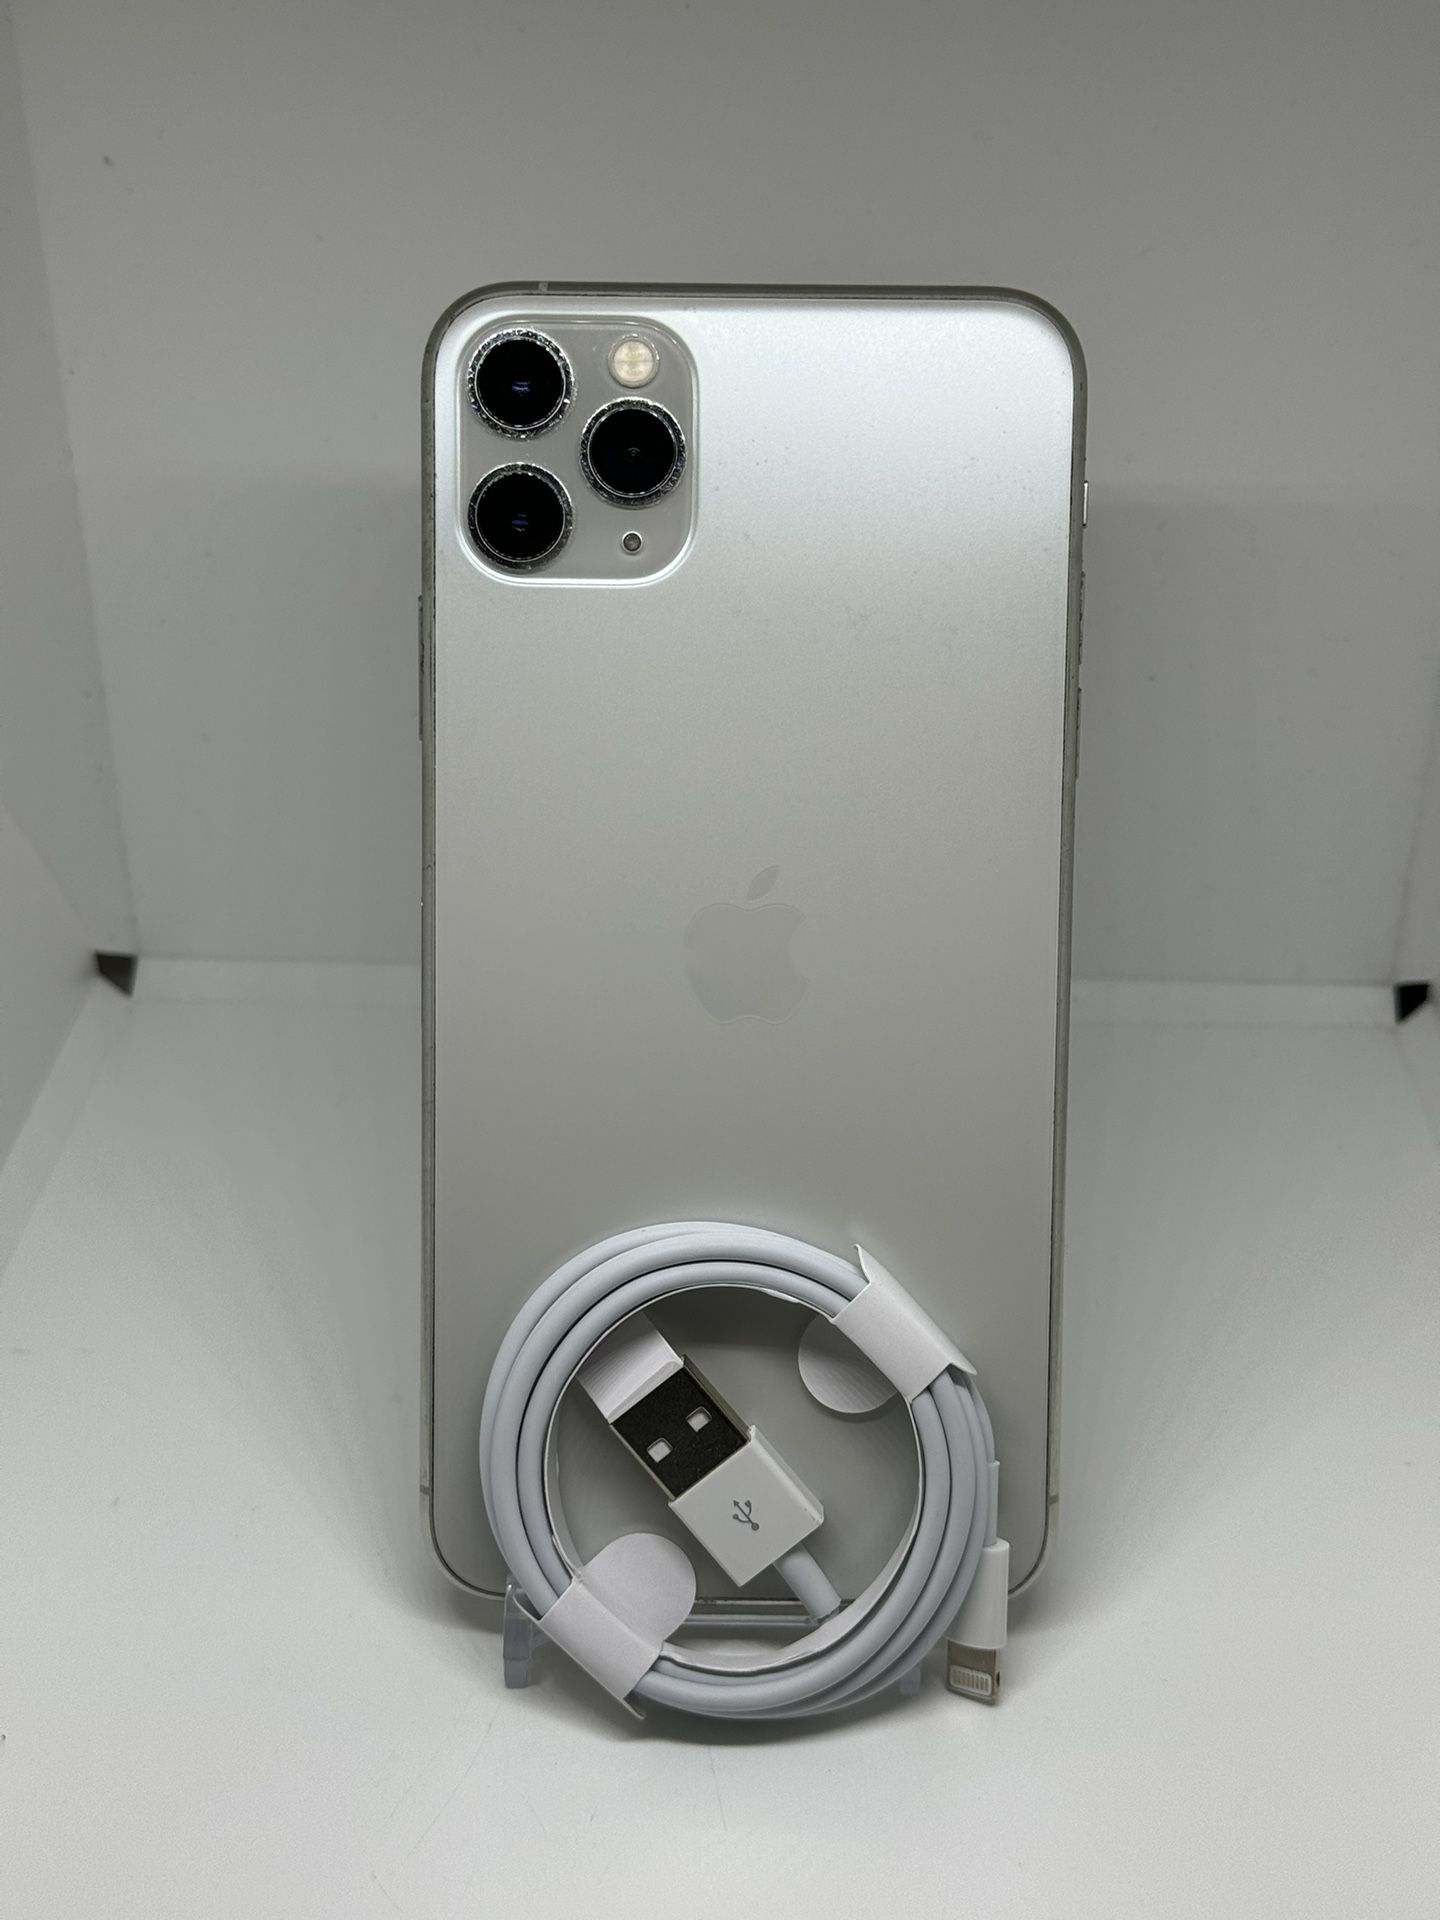 iPhone 11 Pro Max 256gb Silver Unlocked